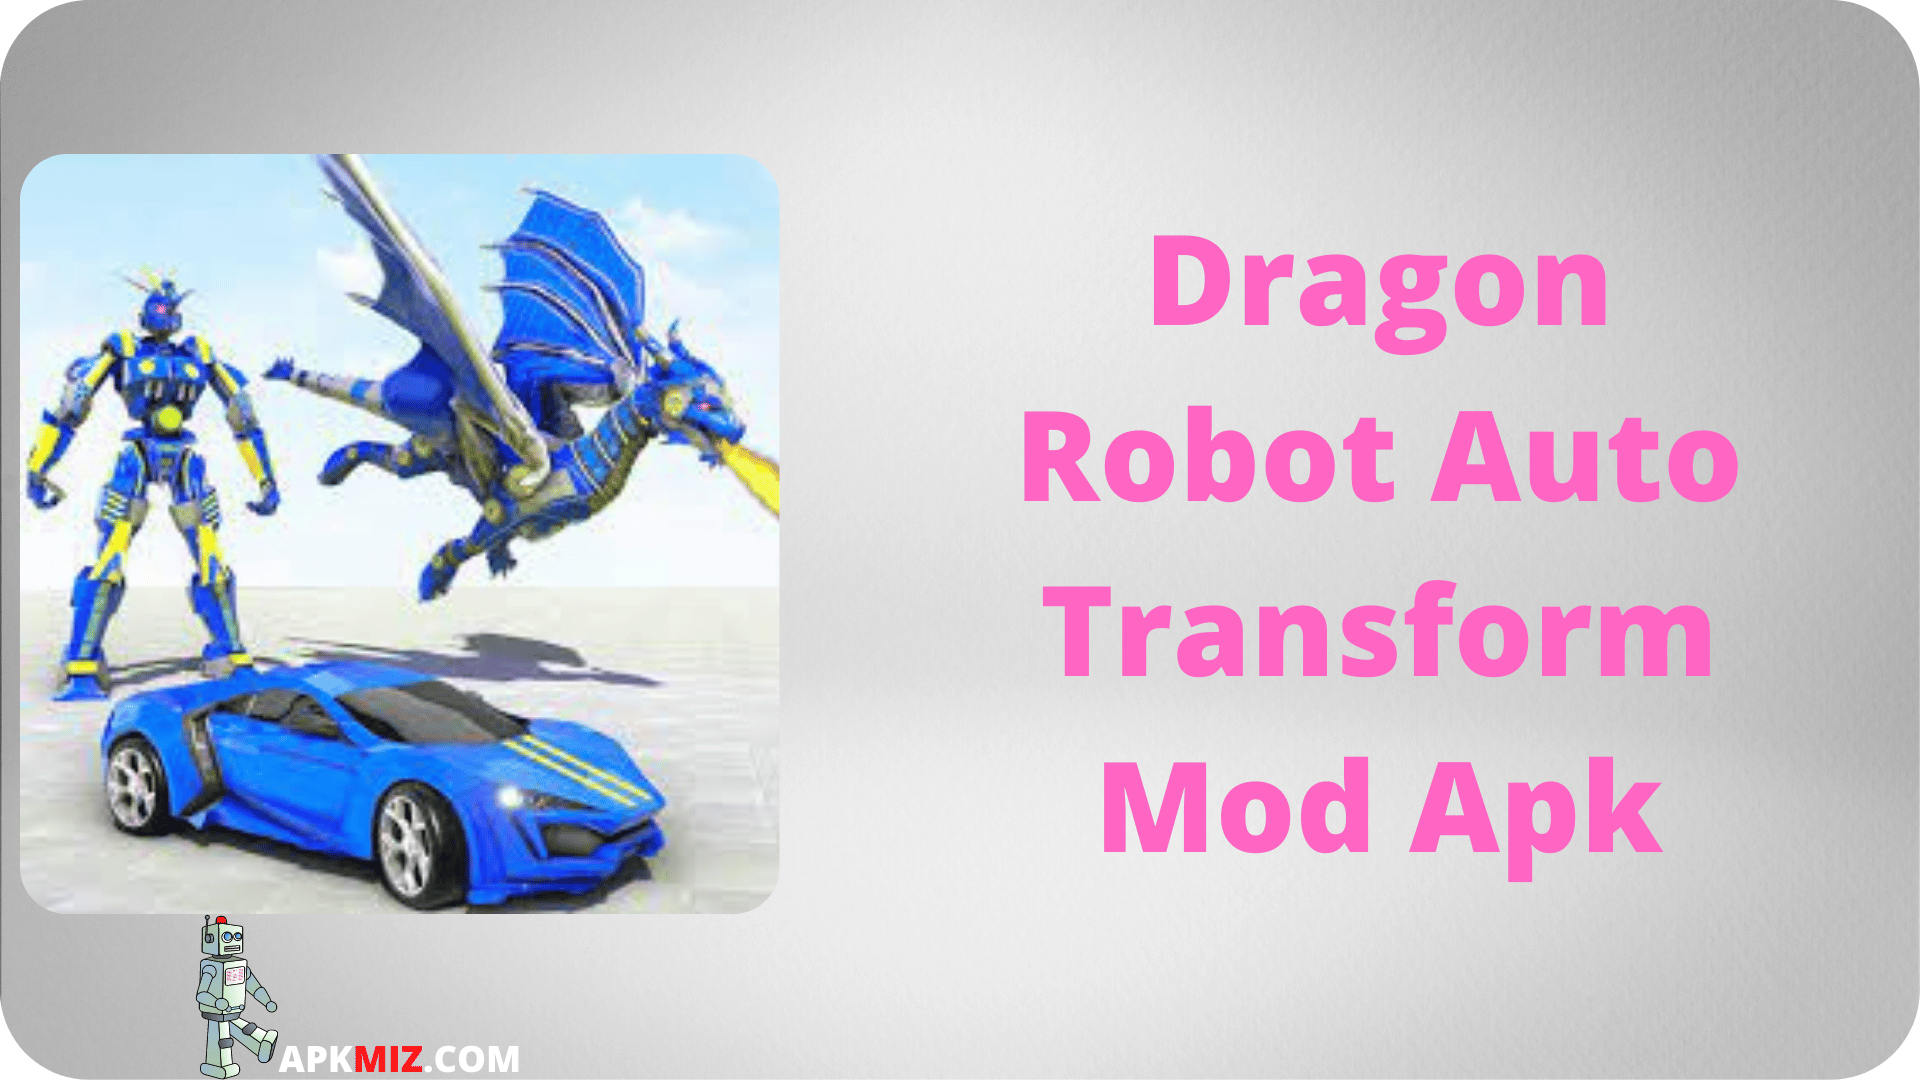 Dragon Robot Auto Transform Mod Apk